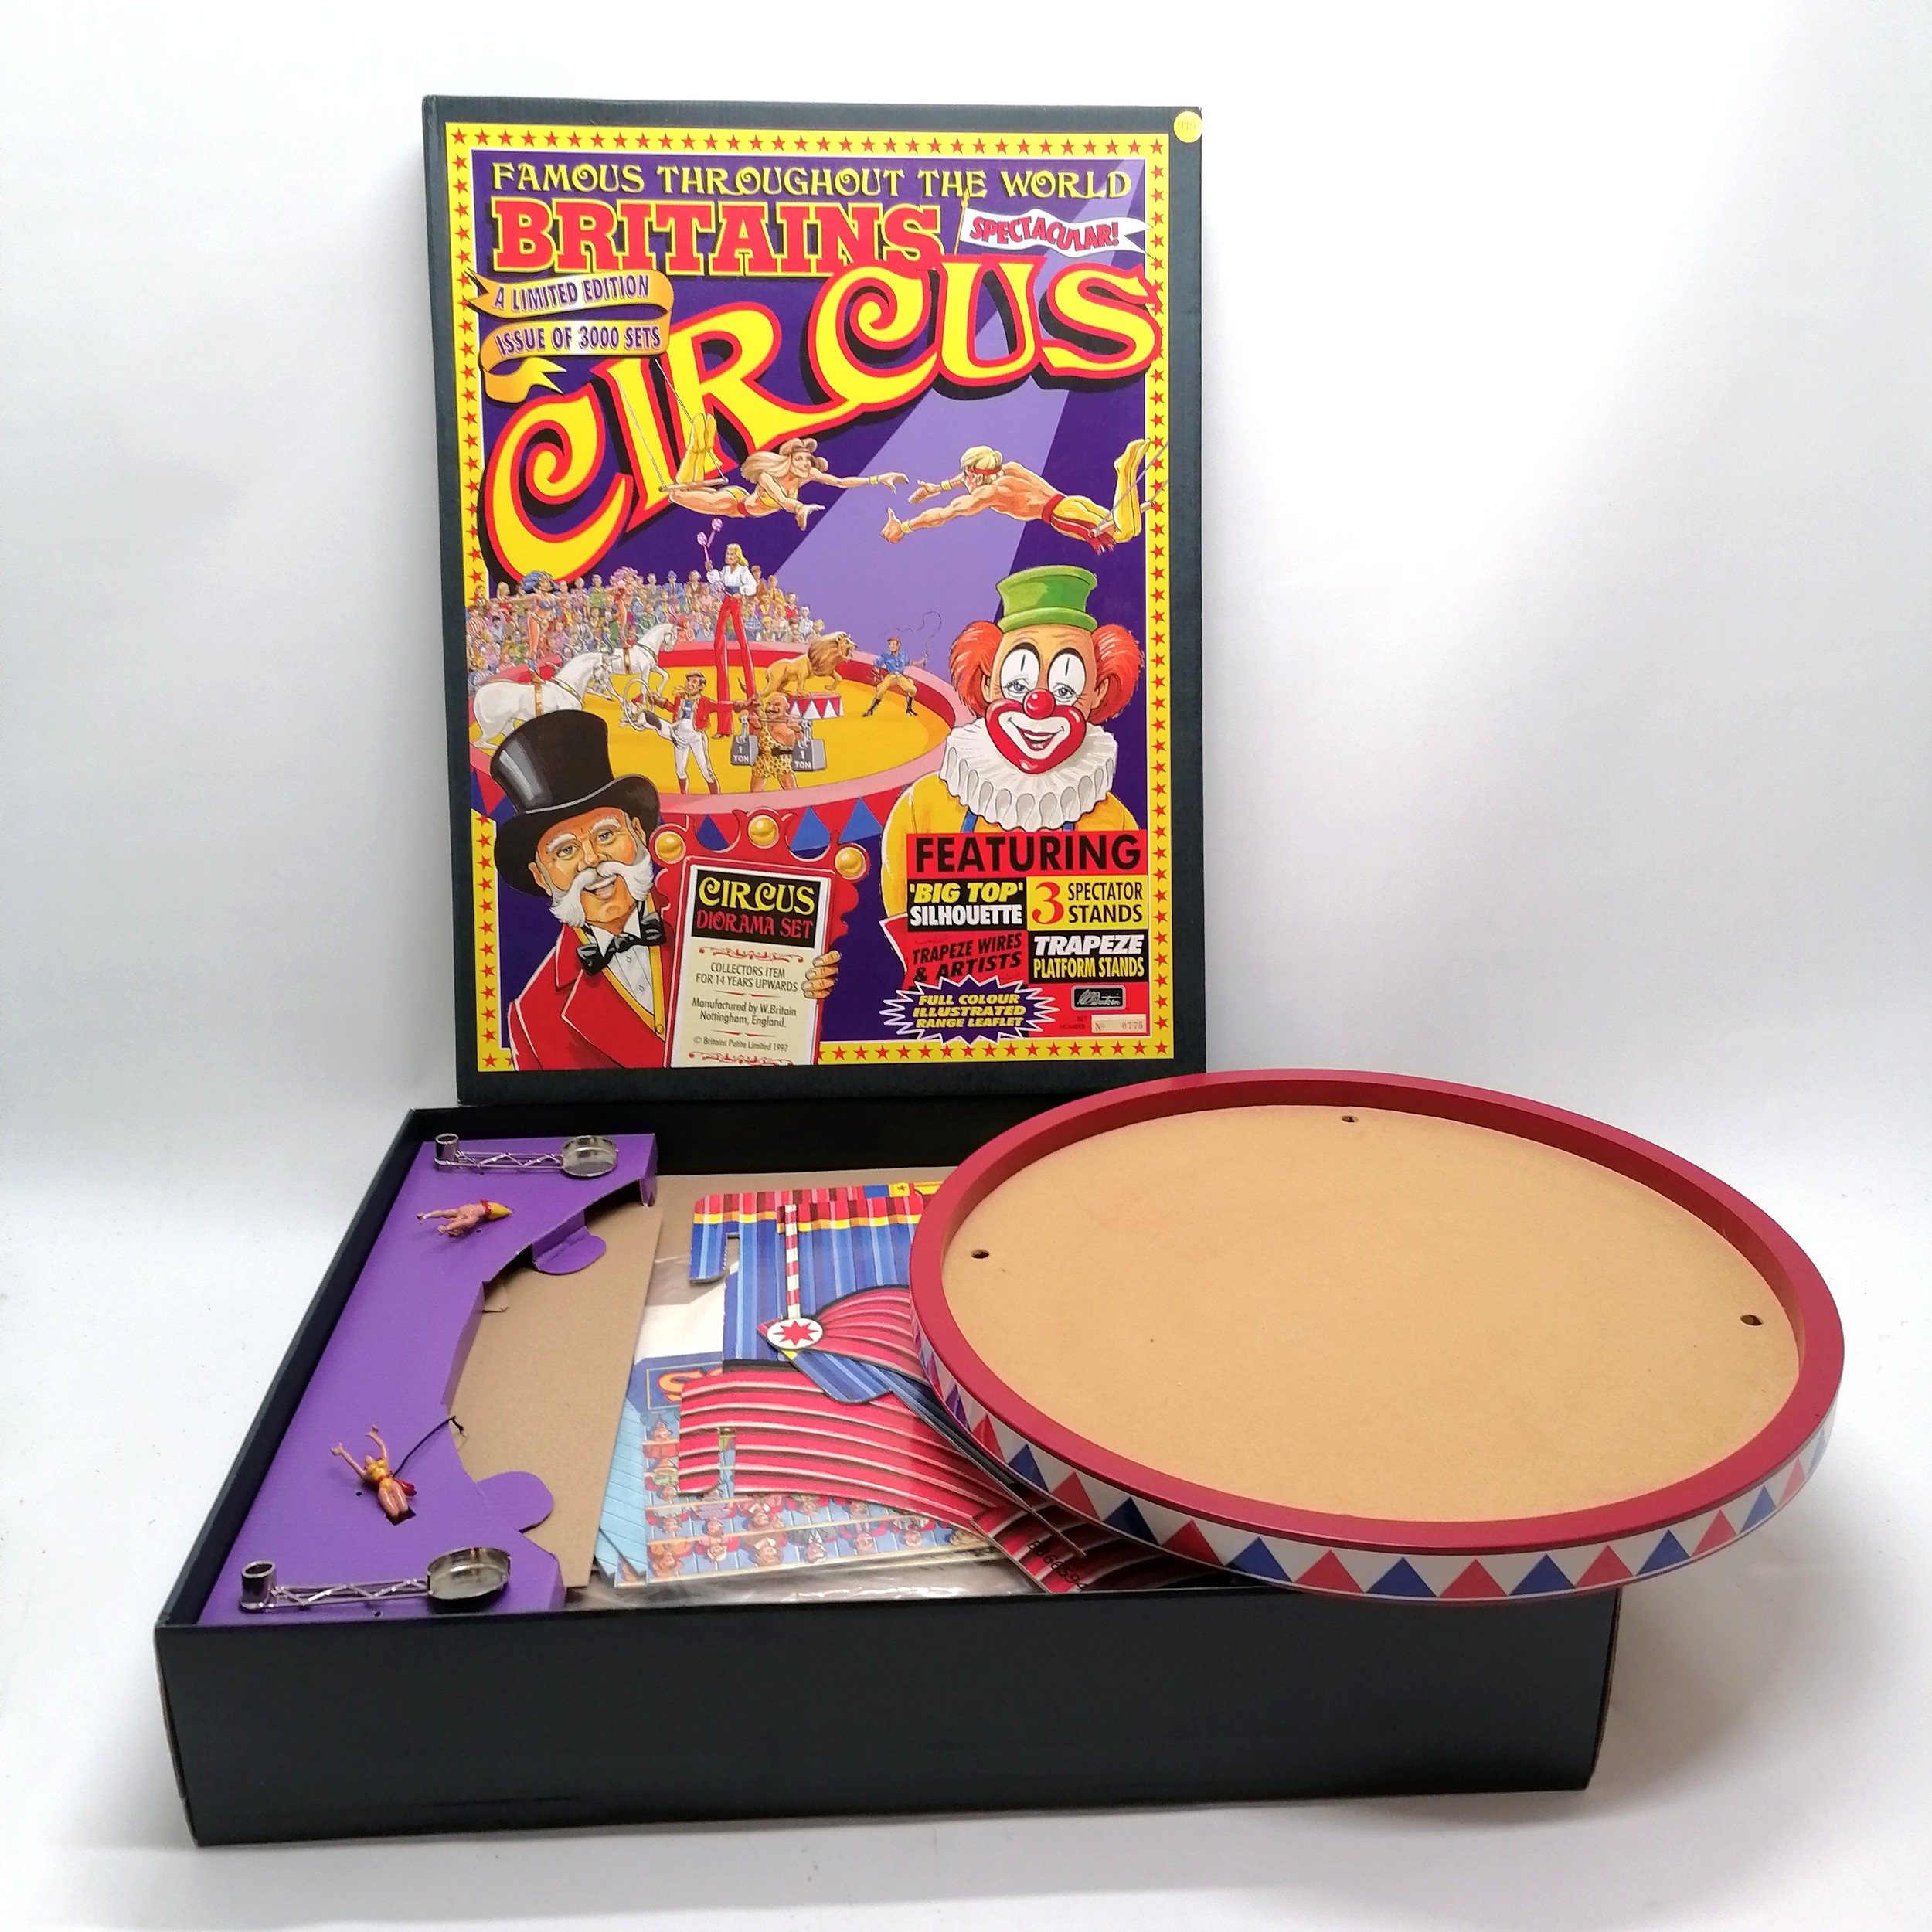 1997 Britains circus diorama set - box 54cm x 42cm x 10cm deep & is complete and in unused condition